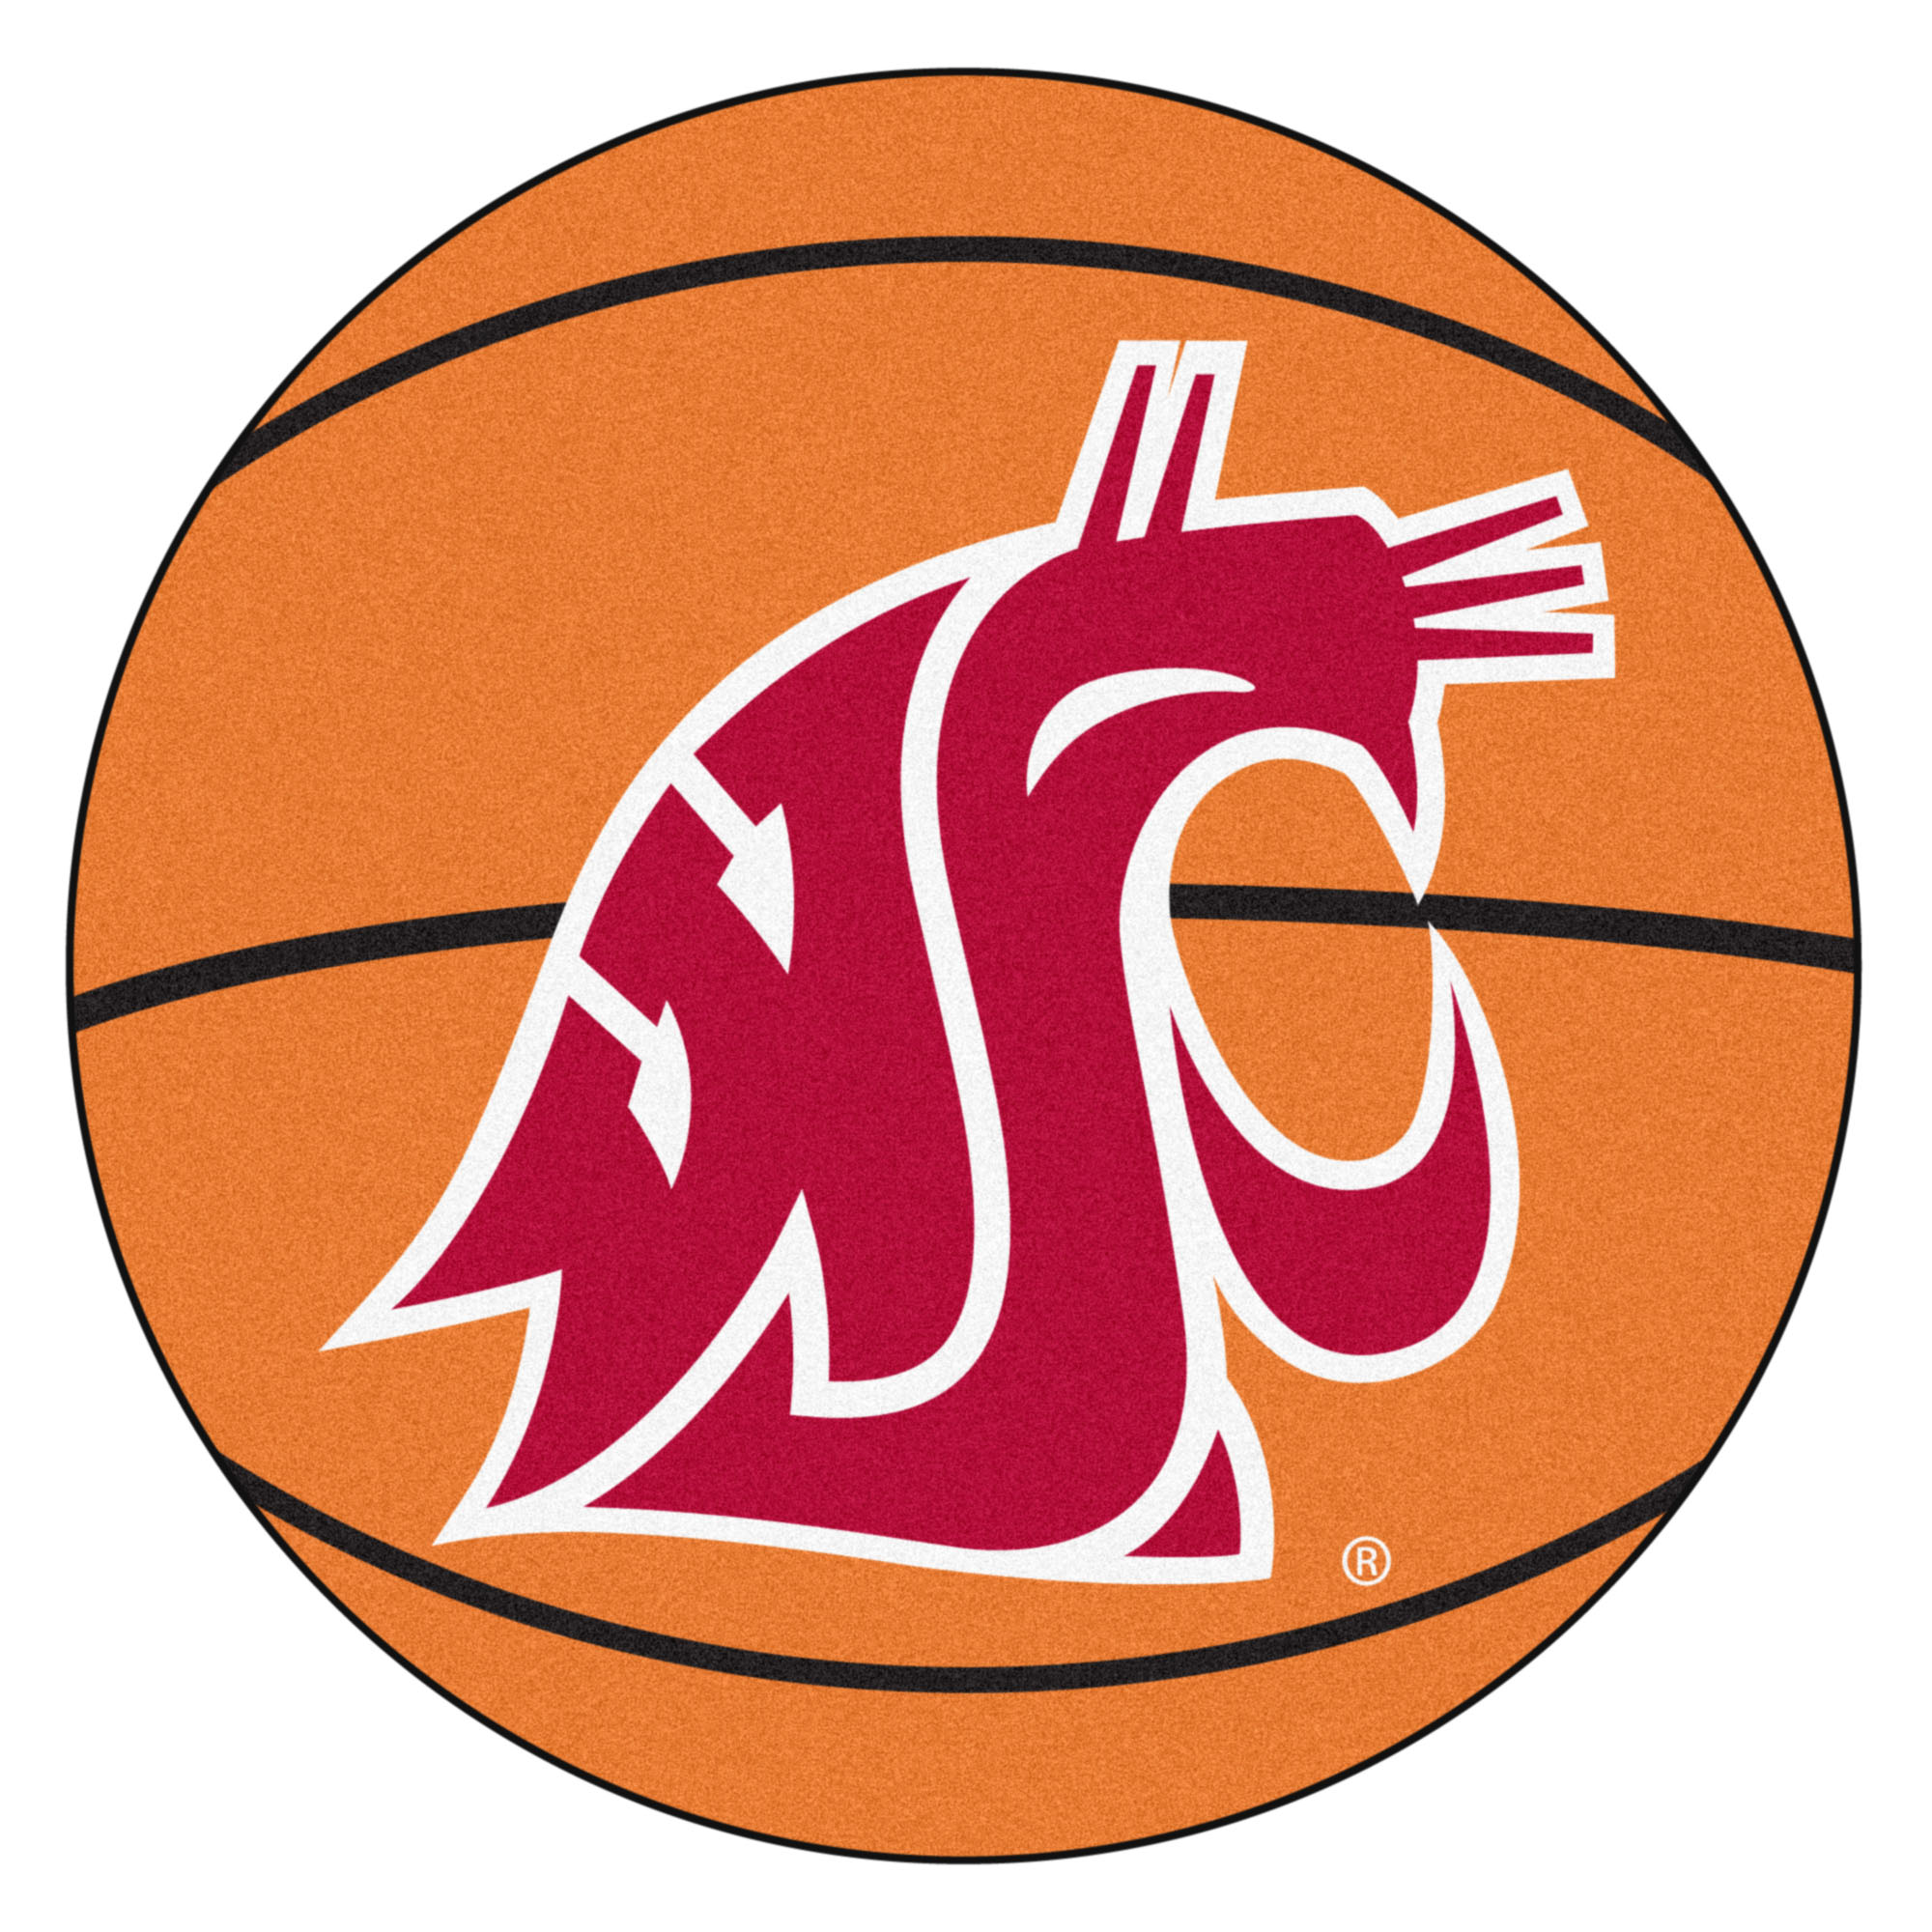 27 round. Логотипы баскетбольных команд. Символ Баскет. Баскетбольная команда Вашингтон. Логотипы команд NCAA баскетбол.